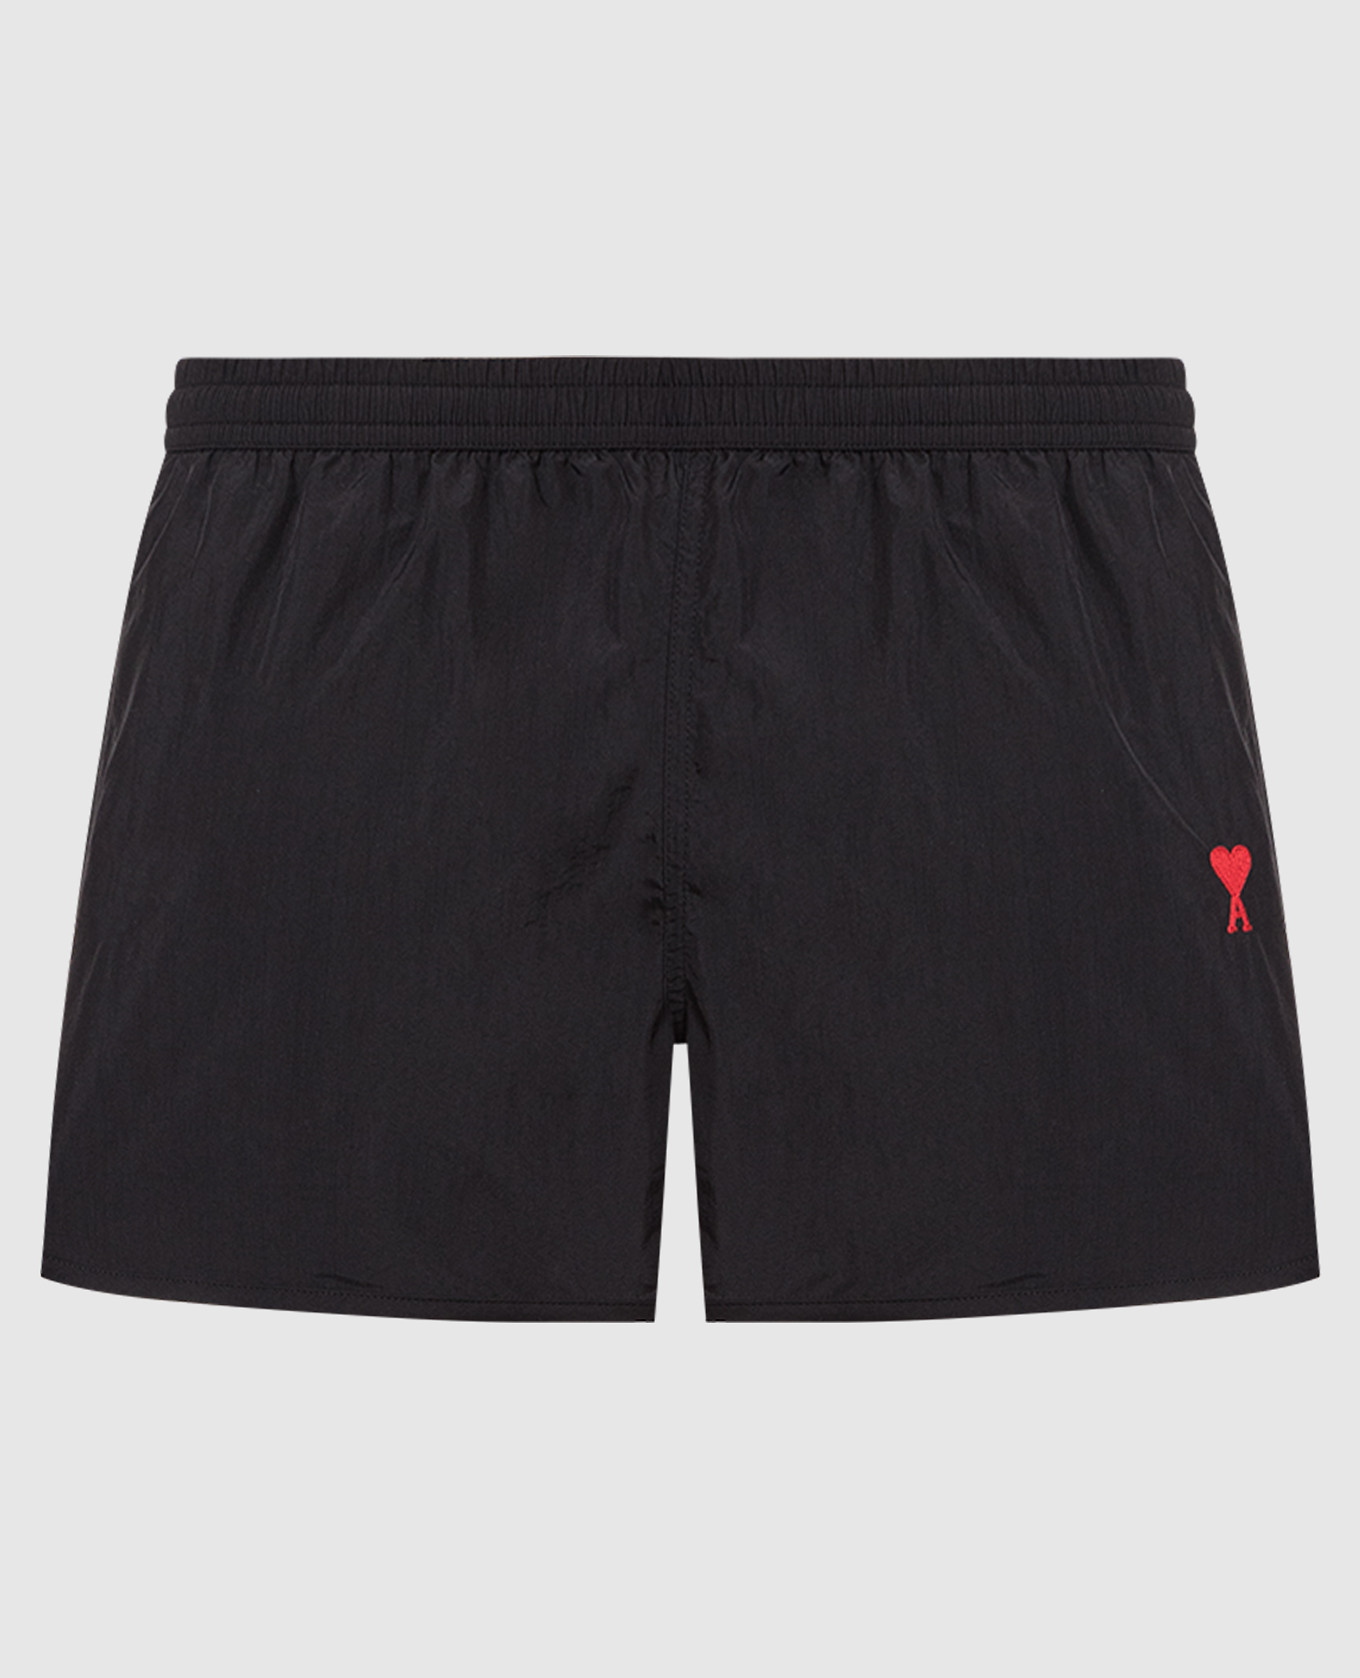 Black logo swim shorts